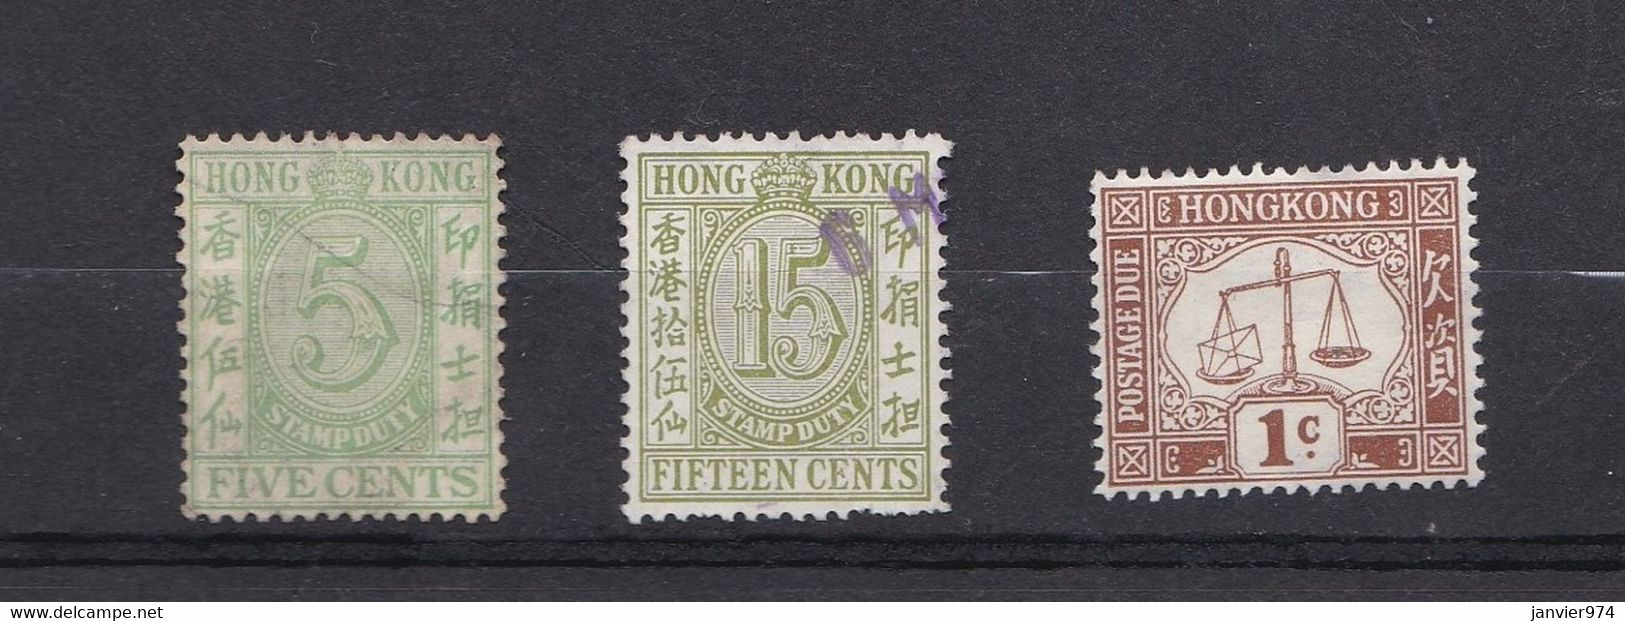 Hong Kong 2 Timbres 5 Cent Et 15 Cents 1938 + Un Timbre Taxe 1924, Voir Scan - Post-fiscaal Zegels